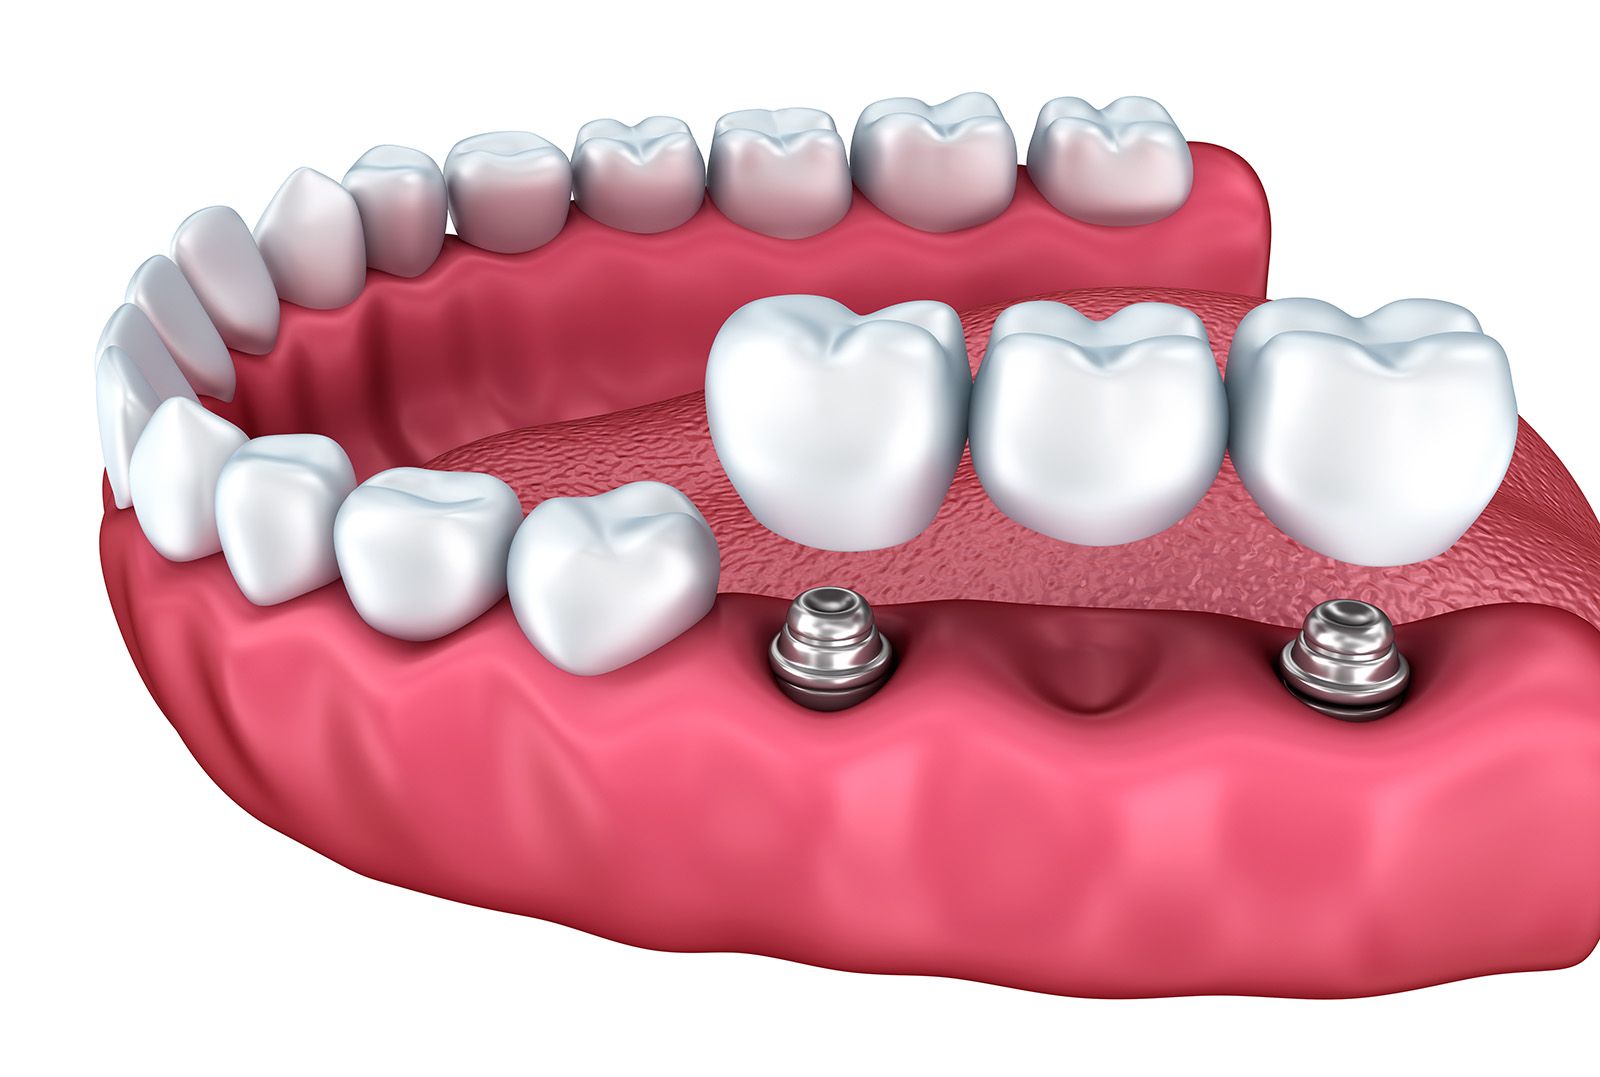 Dental bridges and implants